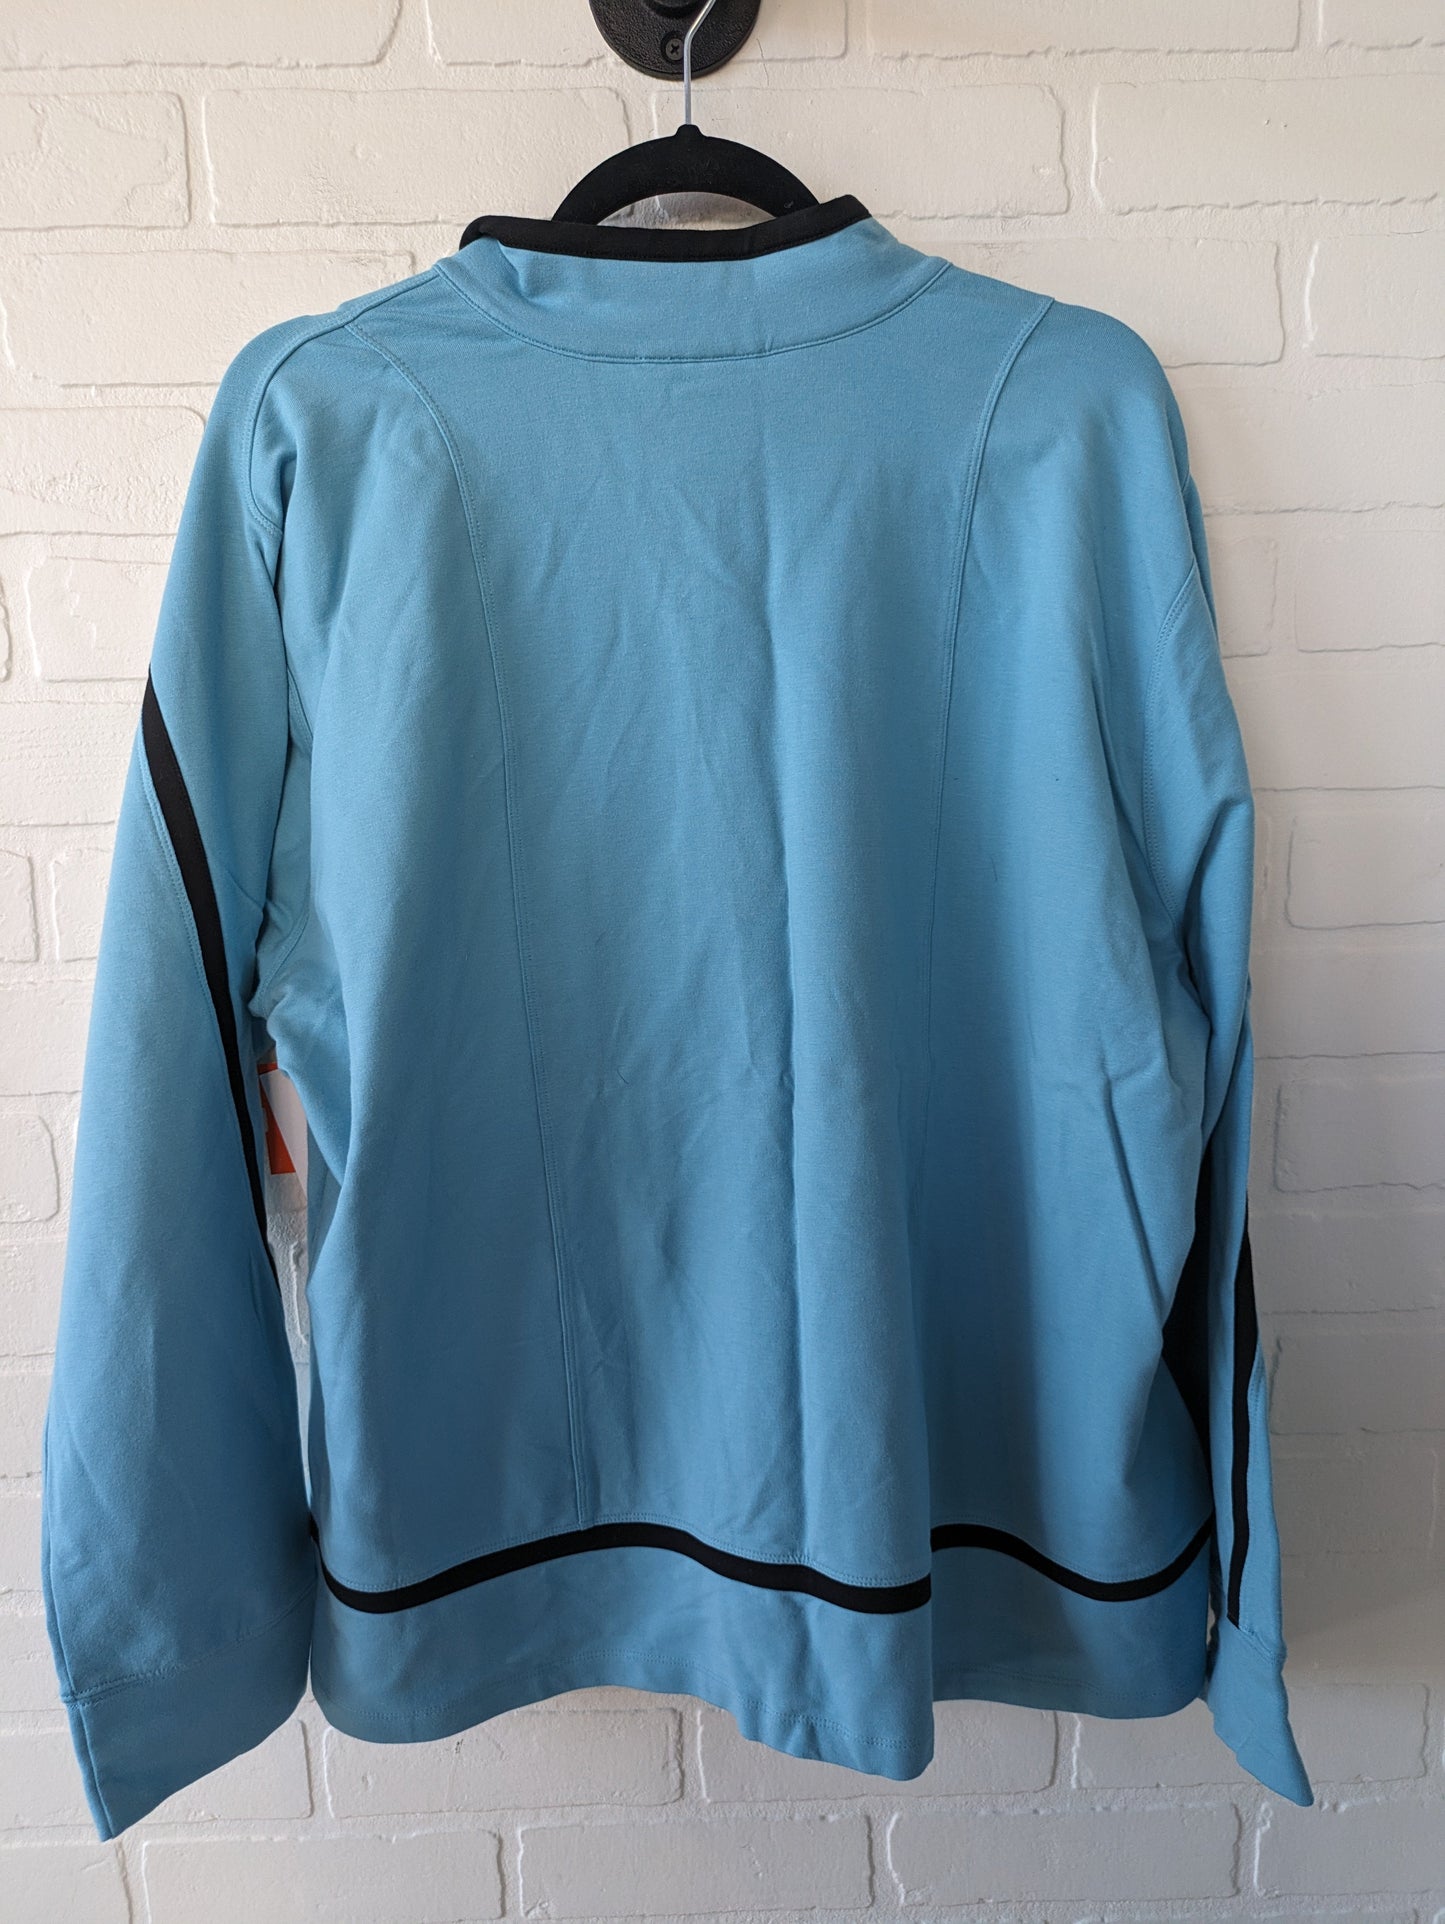 Sweatshirt Collar By Talbots  Size: 2x